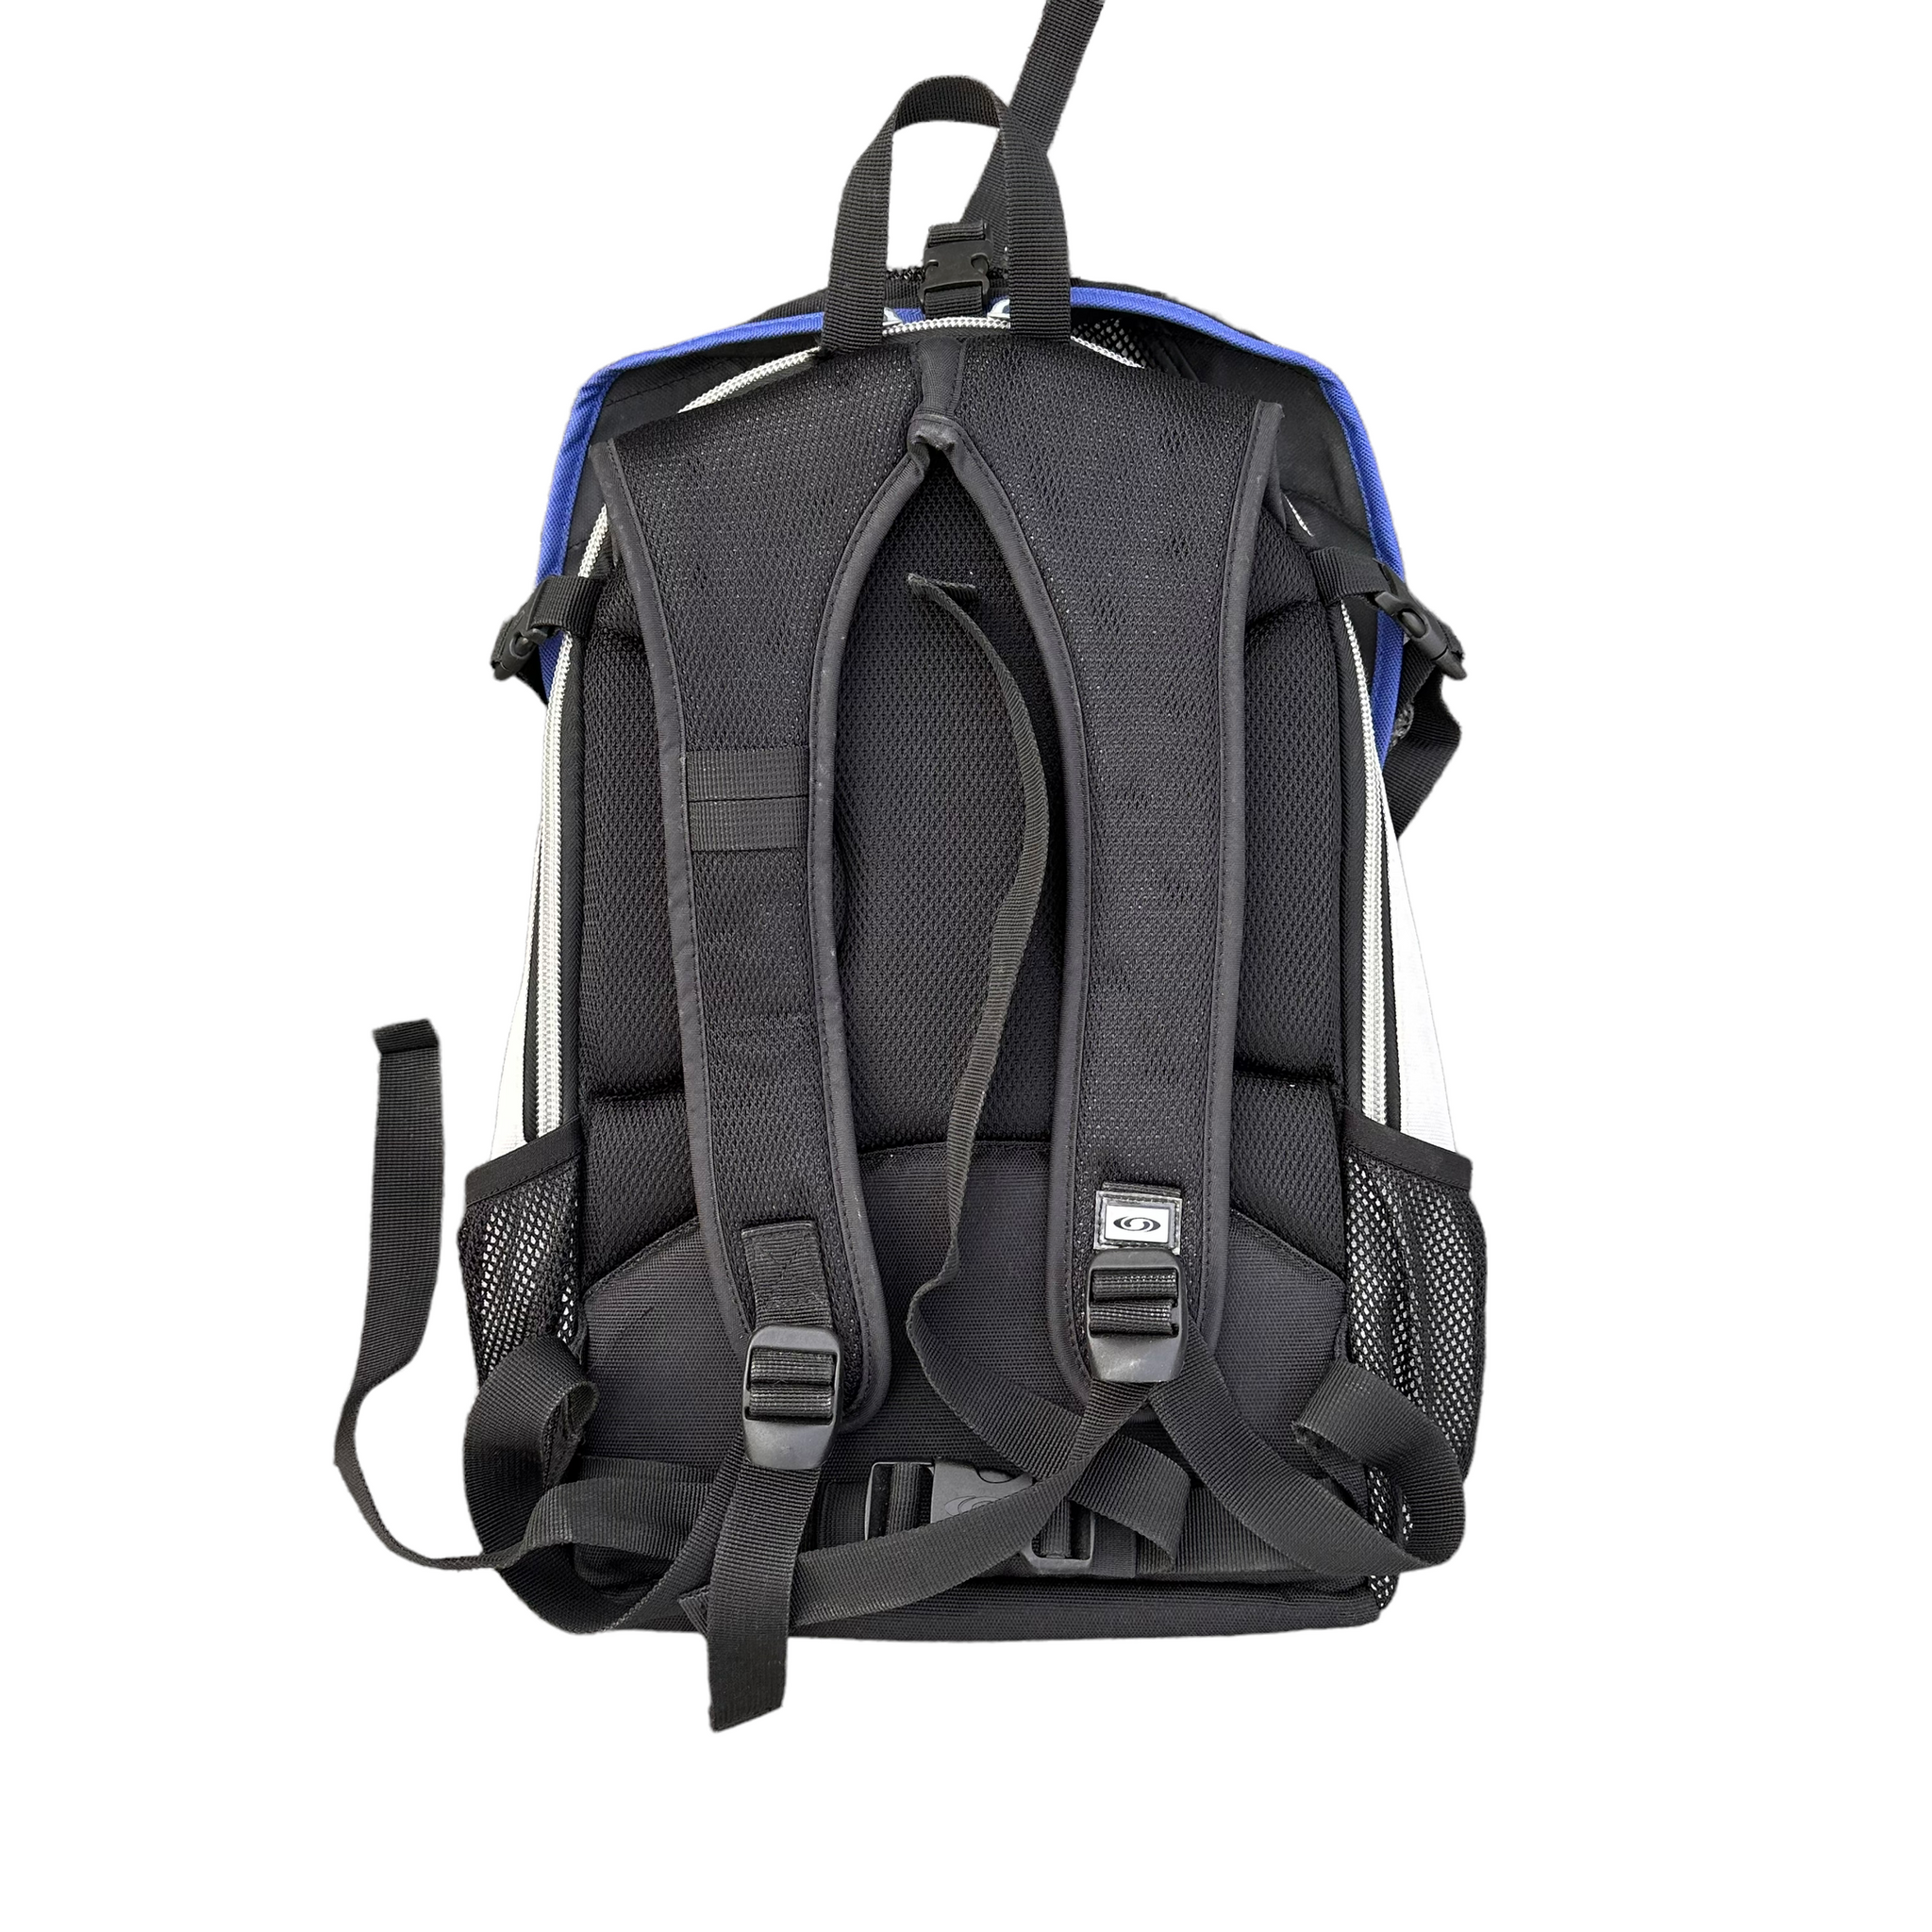 Salomon boot backpack